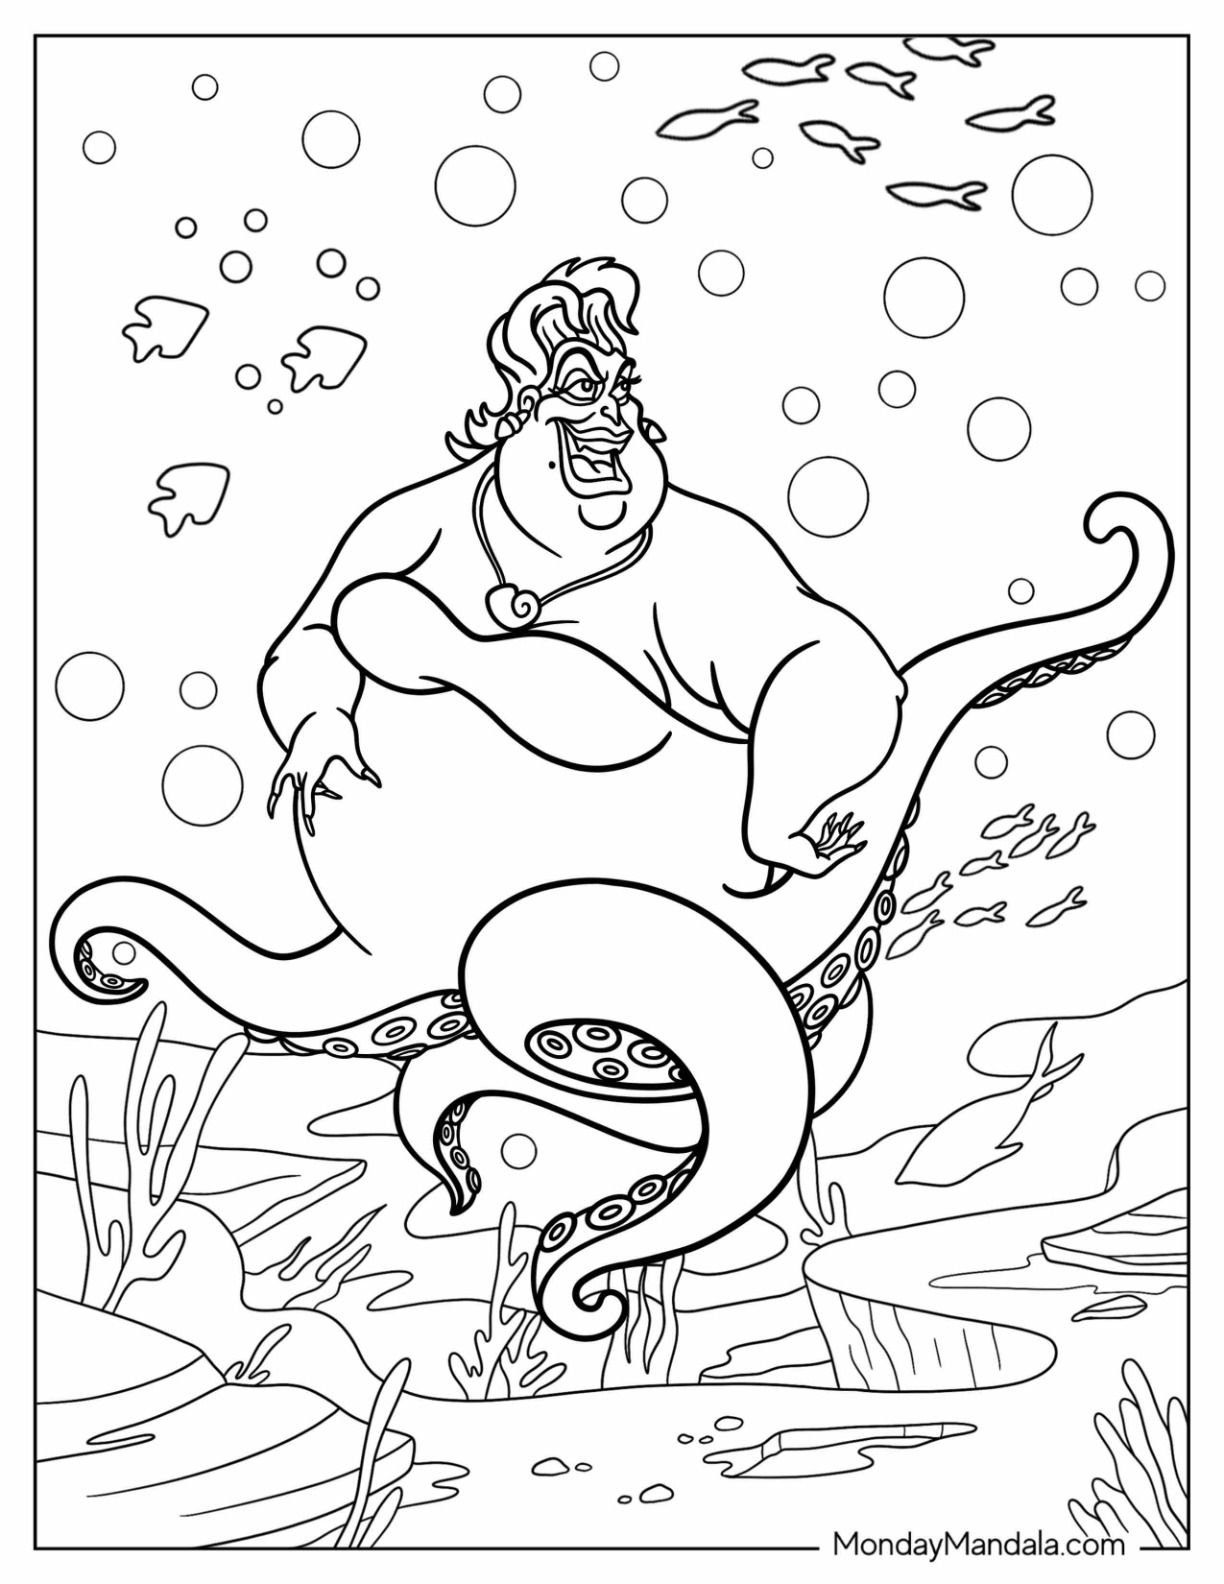 Disney villain coloring pages free pdf printables